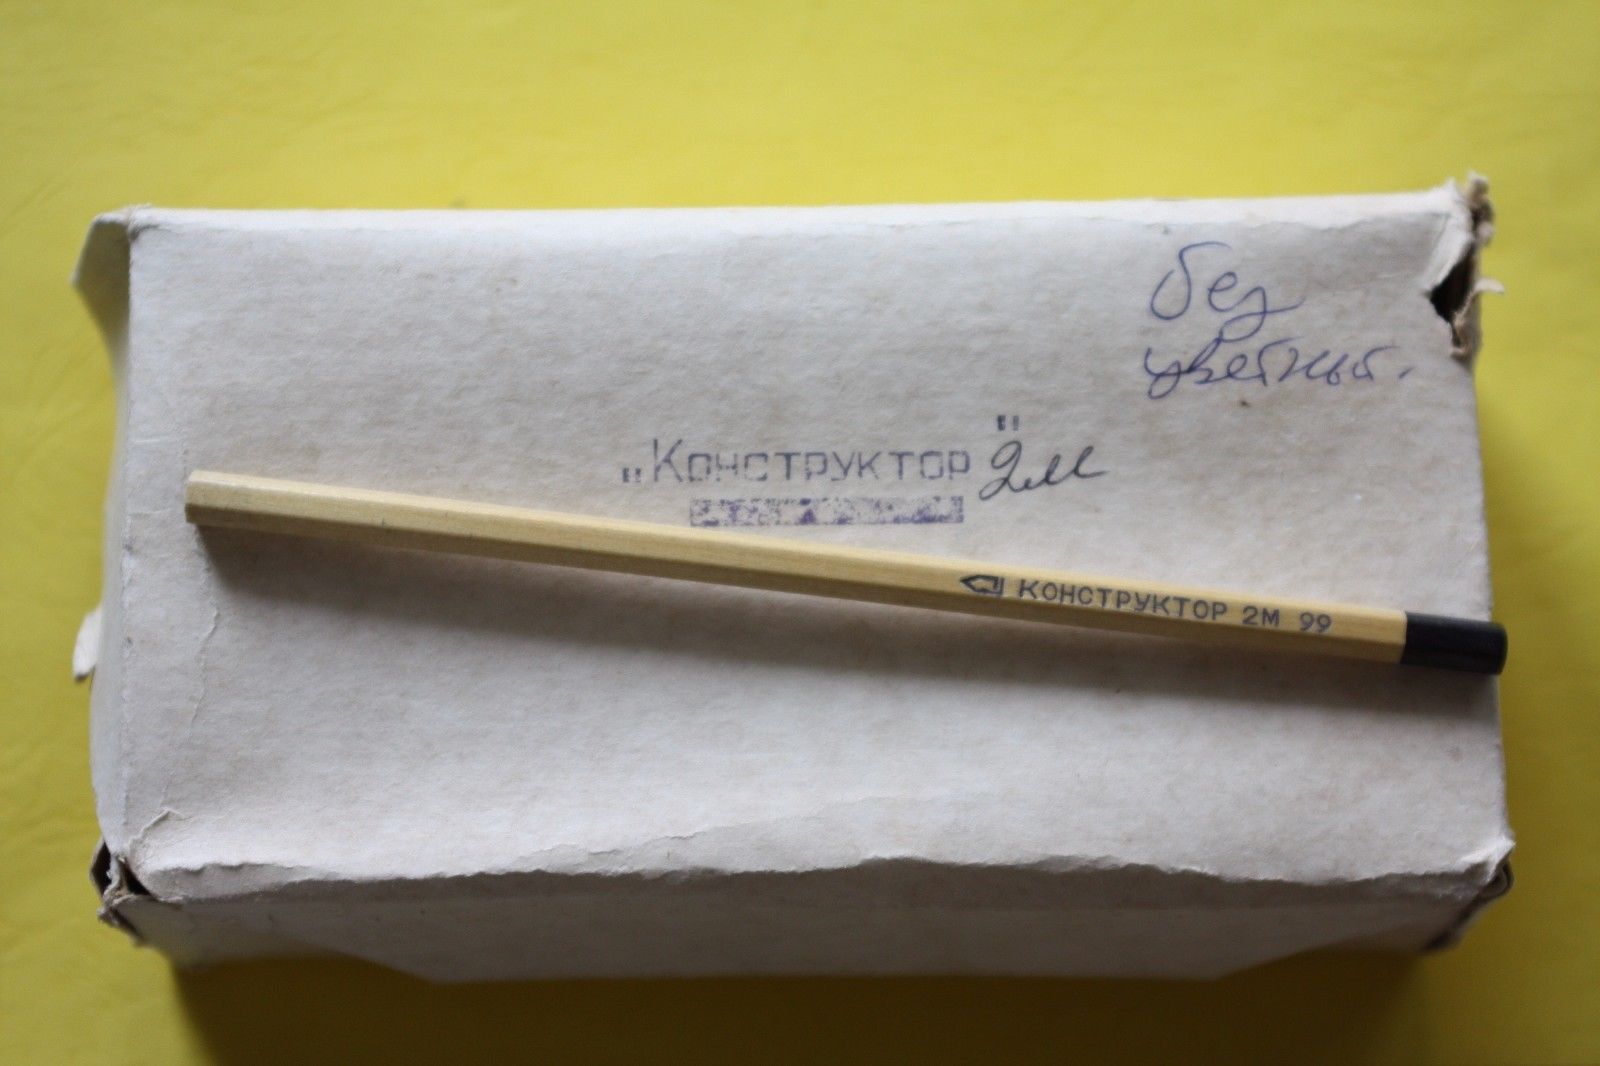 Vintage wood pencils.Конструктор 2М Made in Ukraine.100 pieces.Super quality!